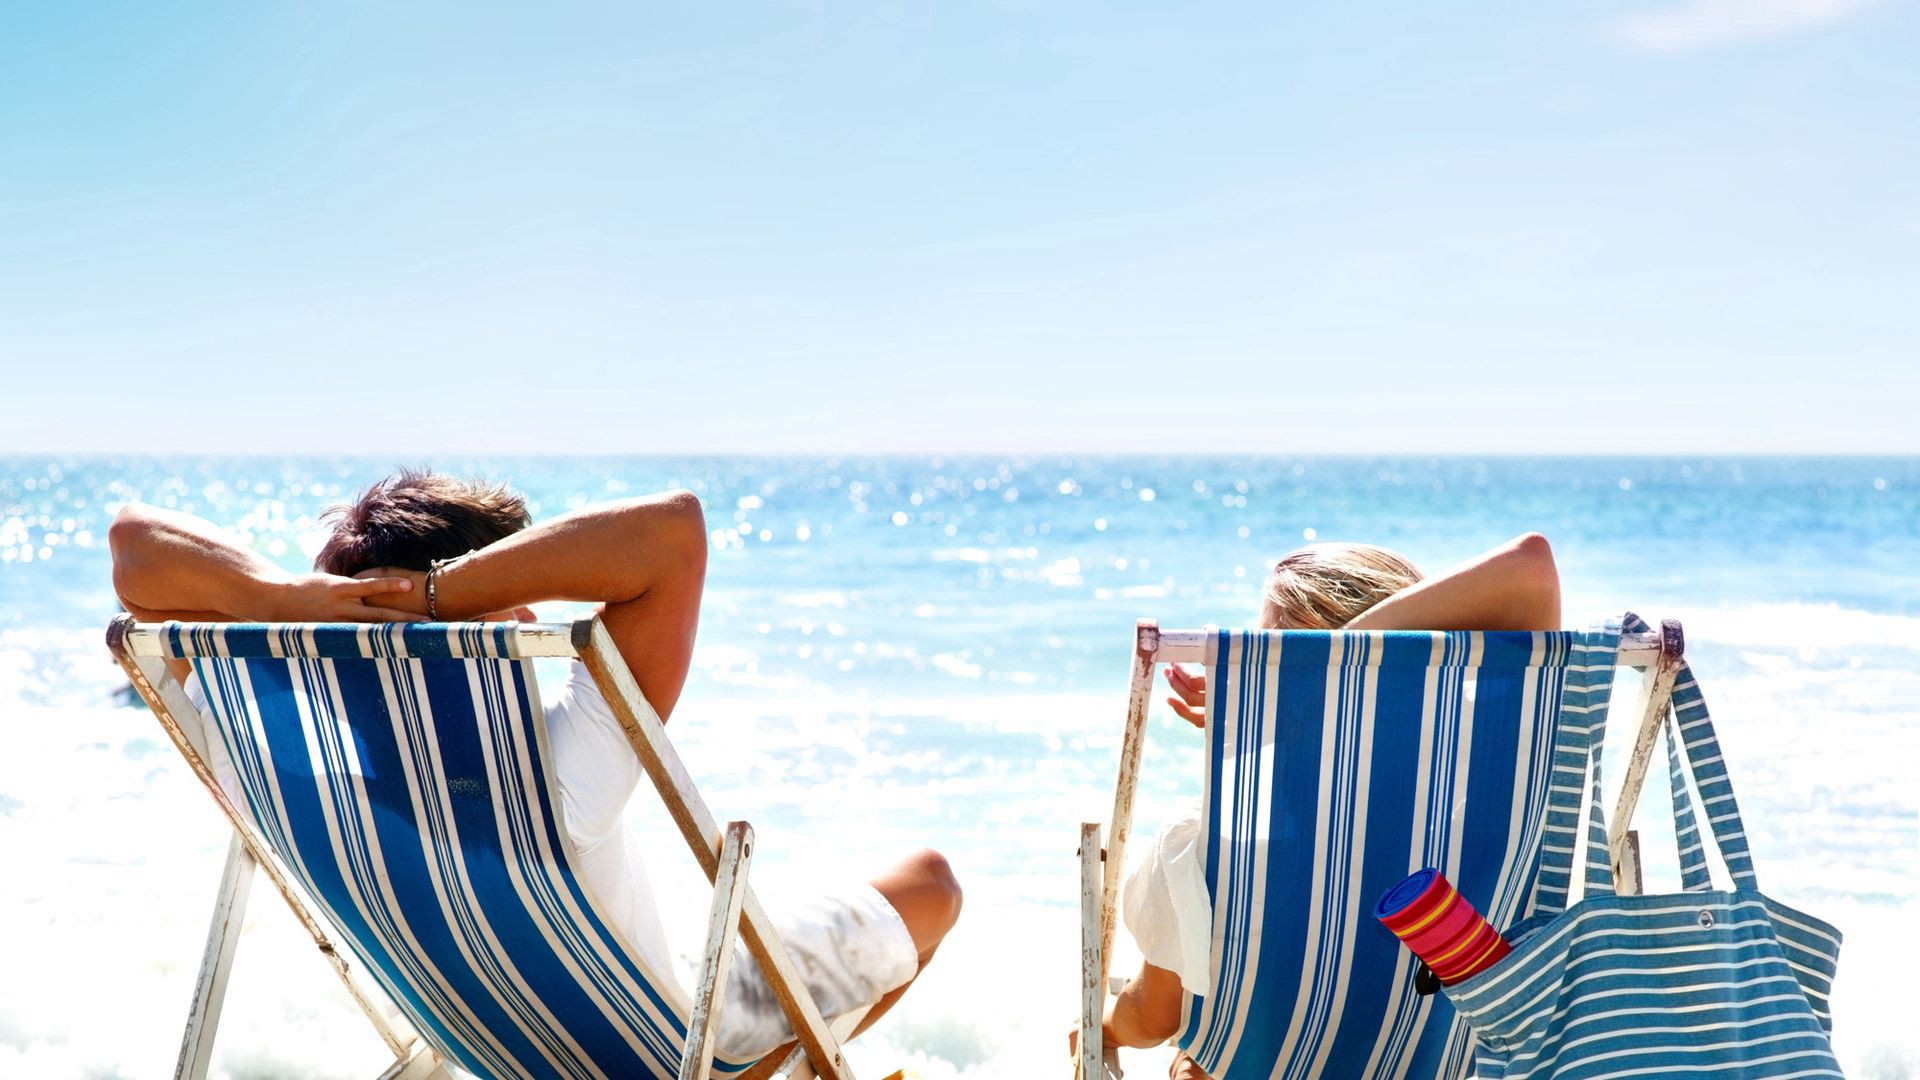 Download PC Wallpaper sea, sun, beach, sand, miscellanea, miscellaneous, couple, pair, sun loungers, sun beds, sunbathe